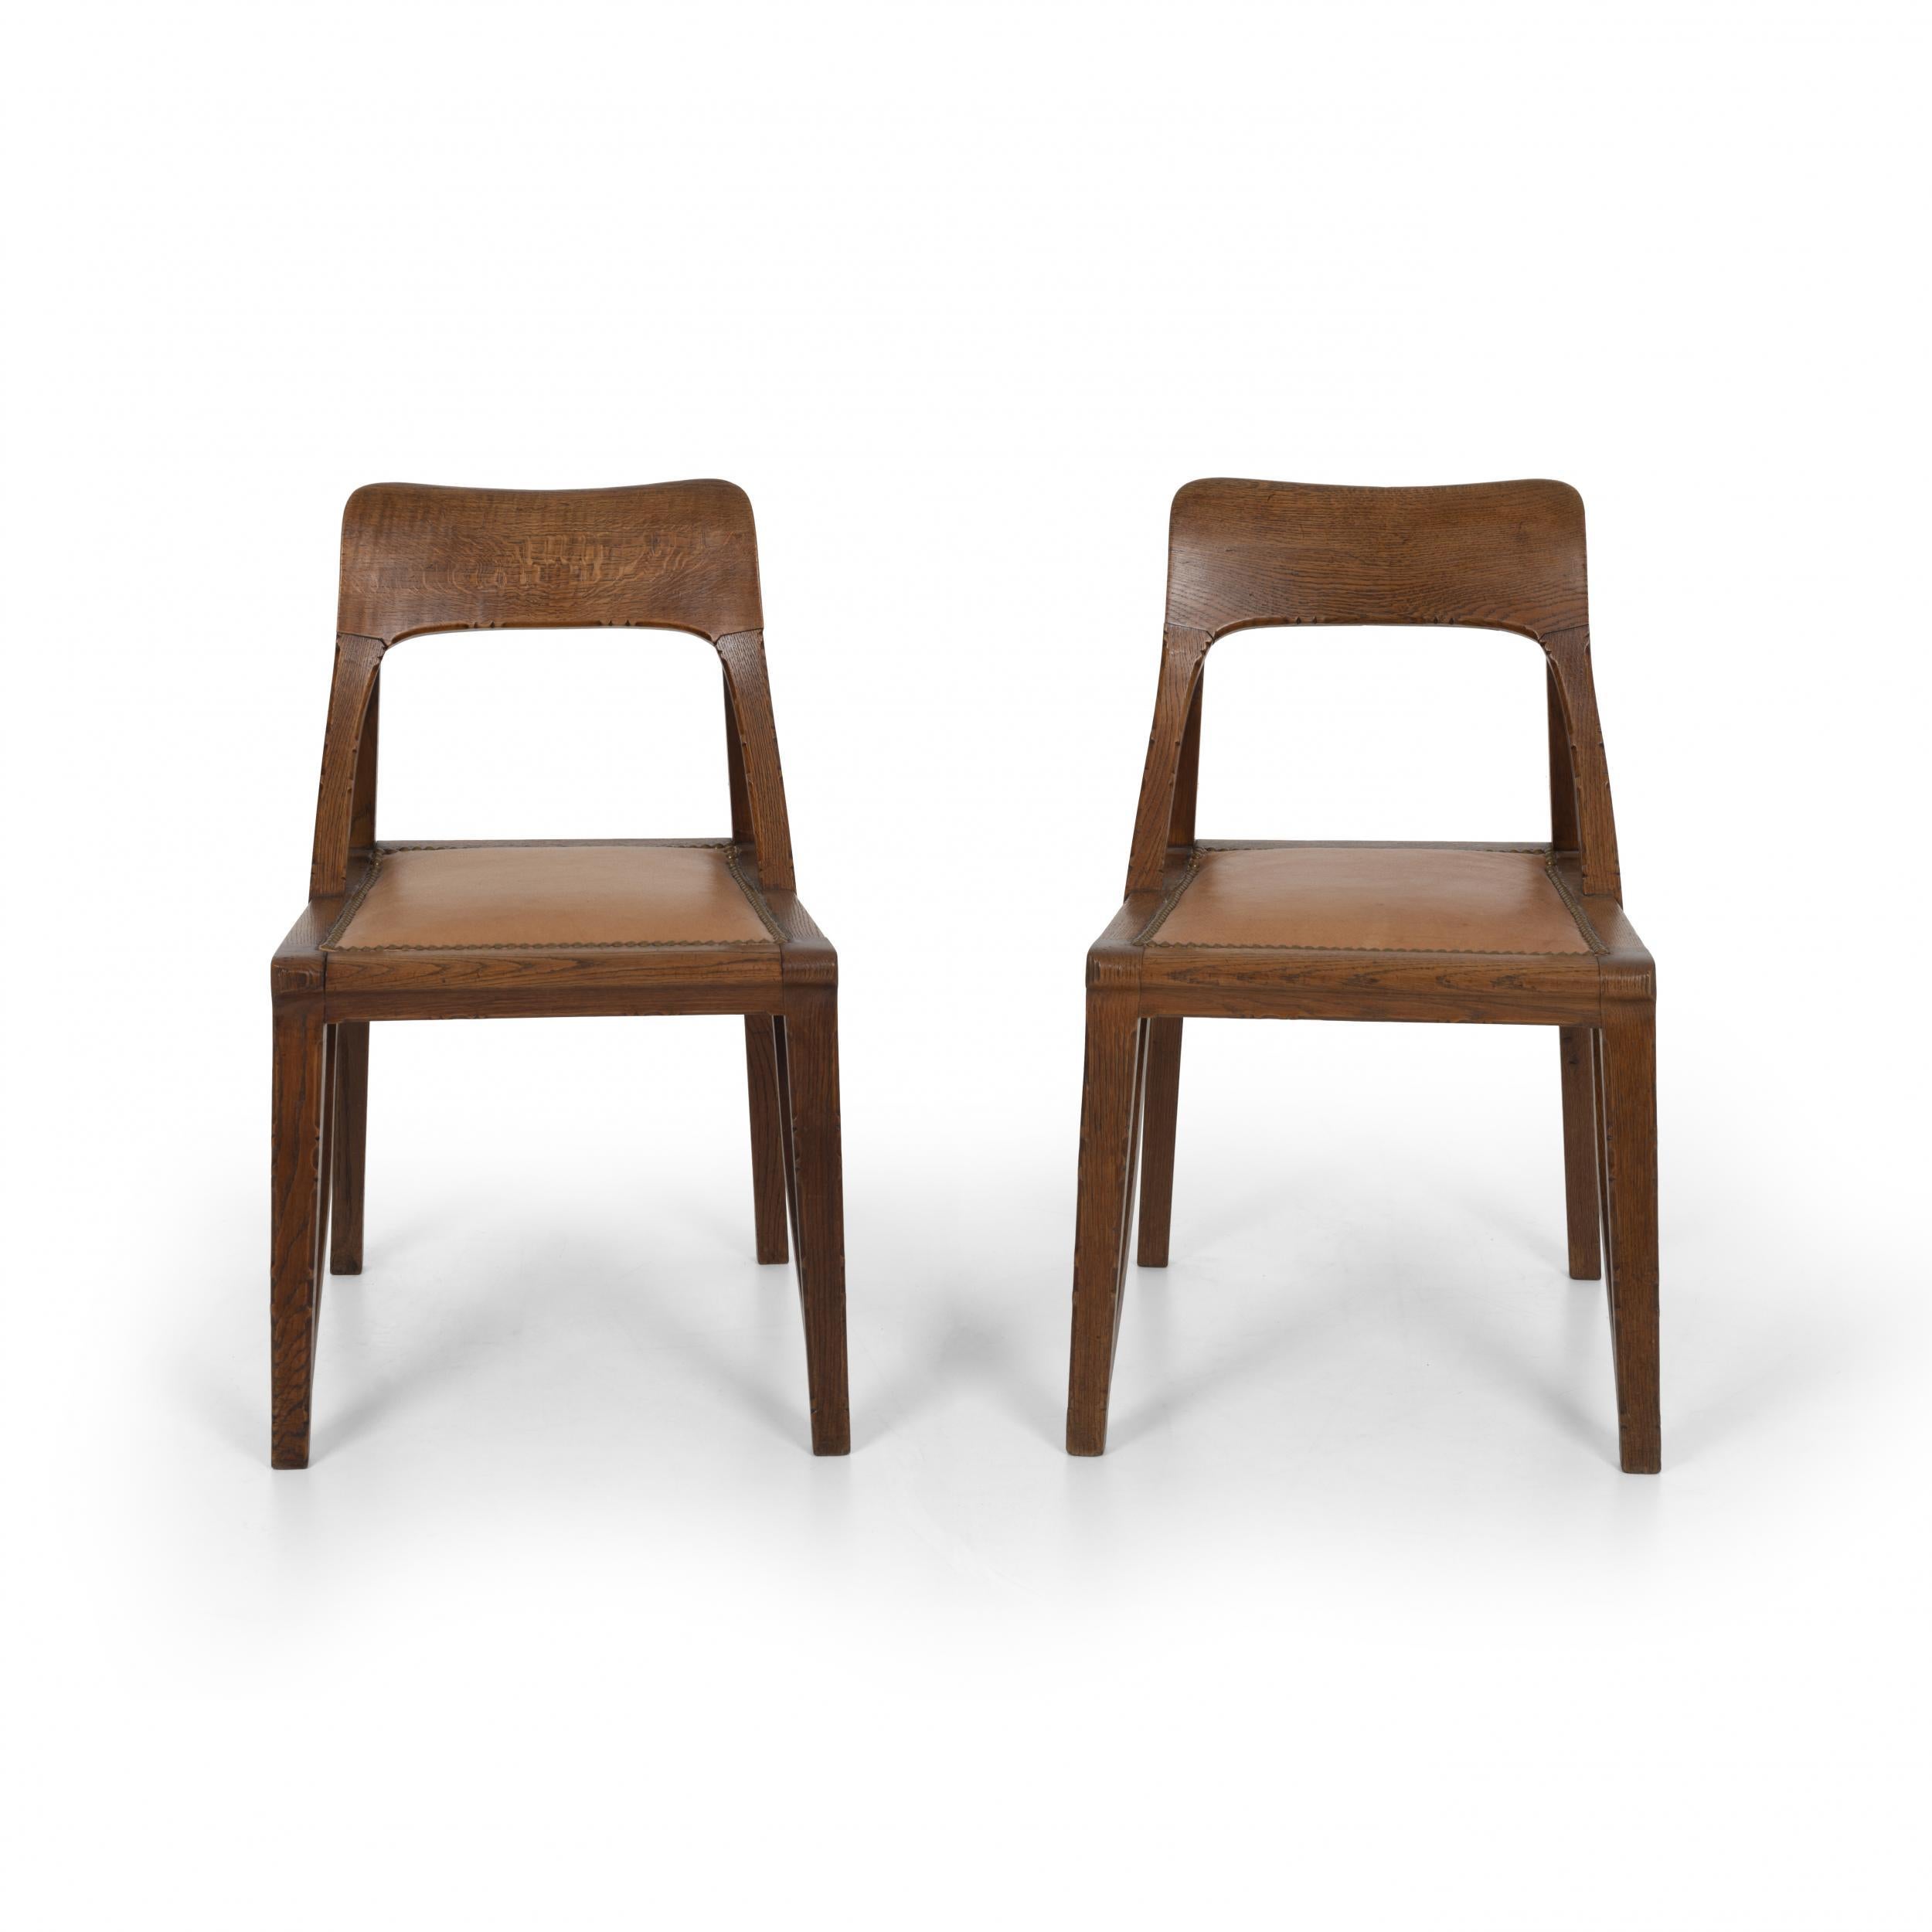 Paar Riemerschmidt-Sessel für Liberty & Co., Eiche, gepolsterte Sitze.
 